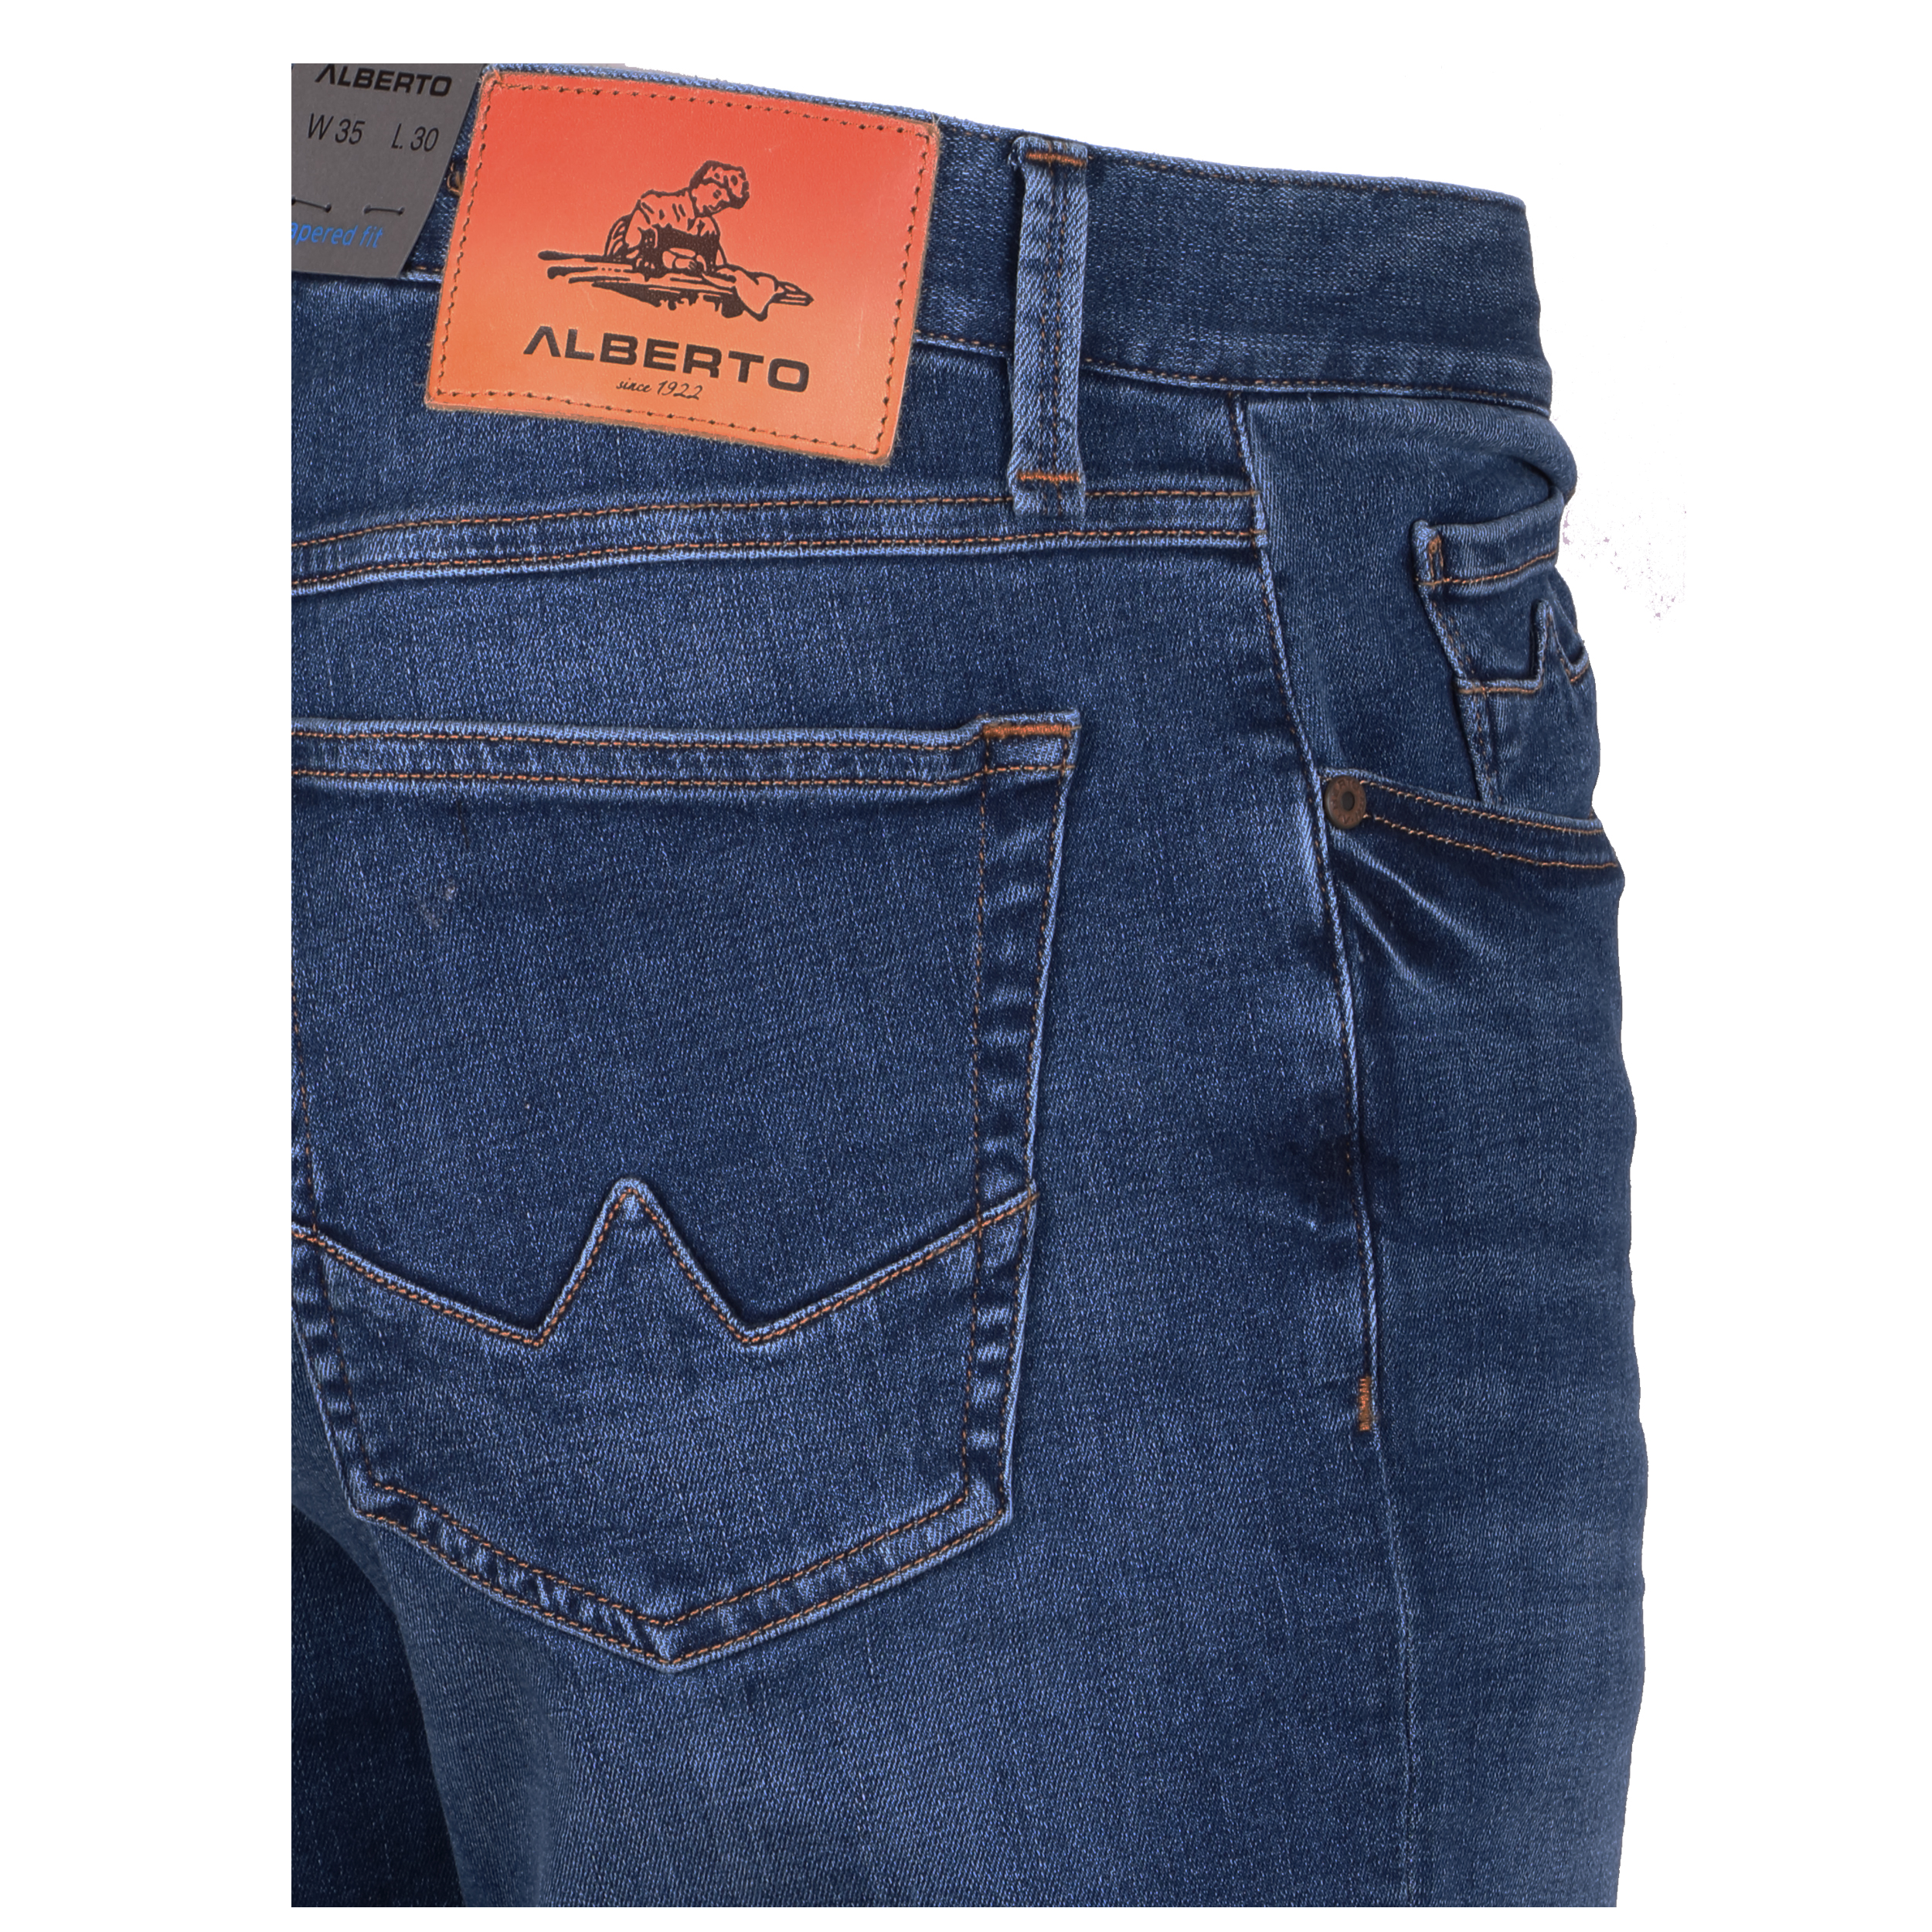 Alberto Herren Jeans Slipe tapered fit - blau 32/32